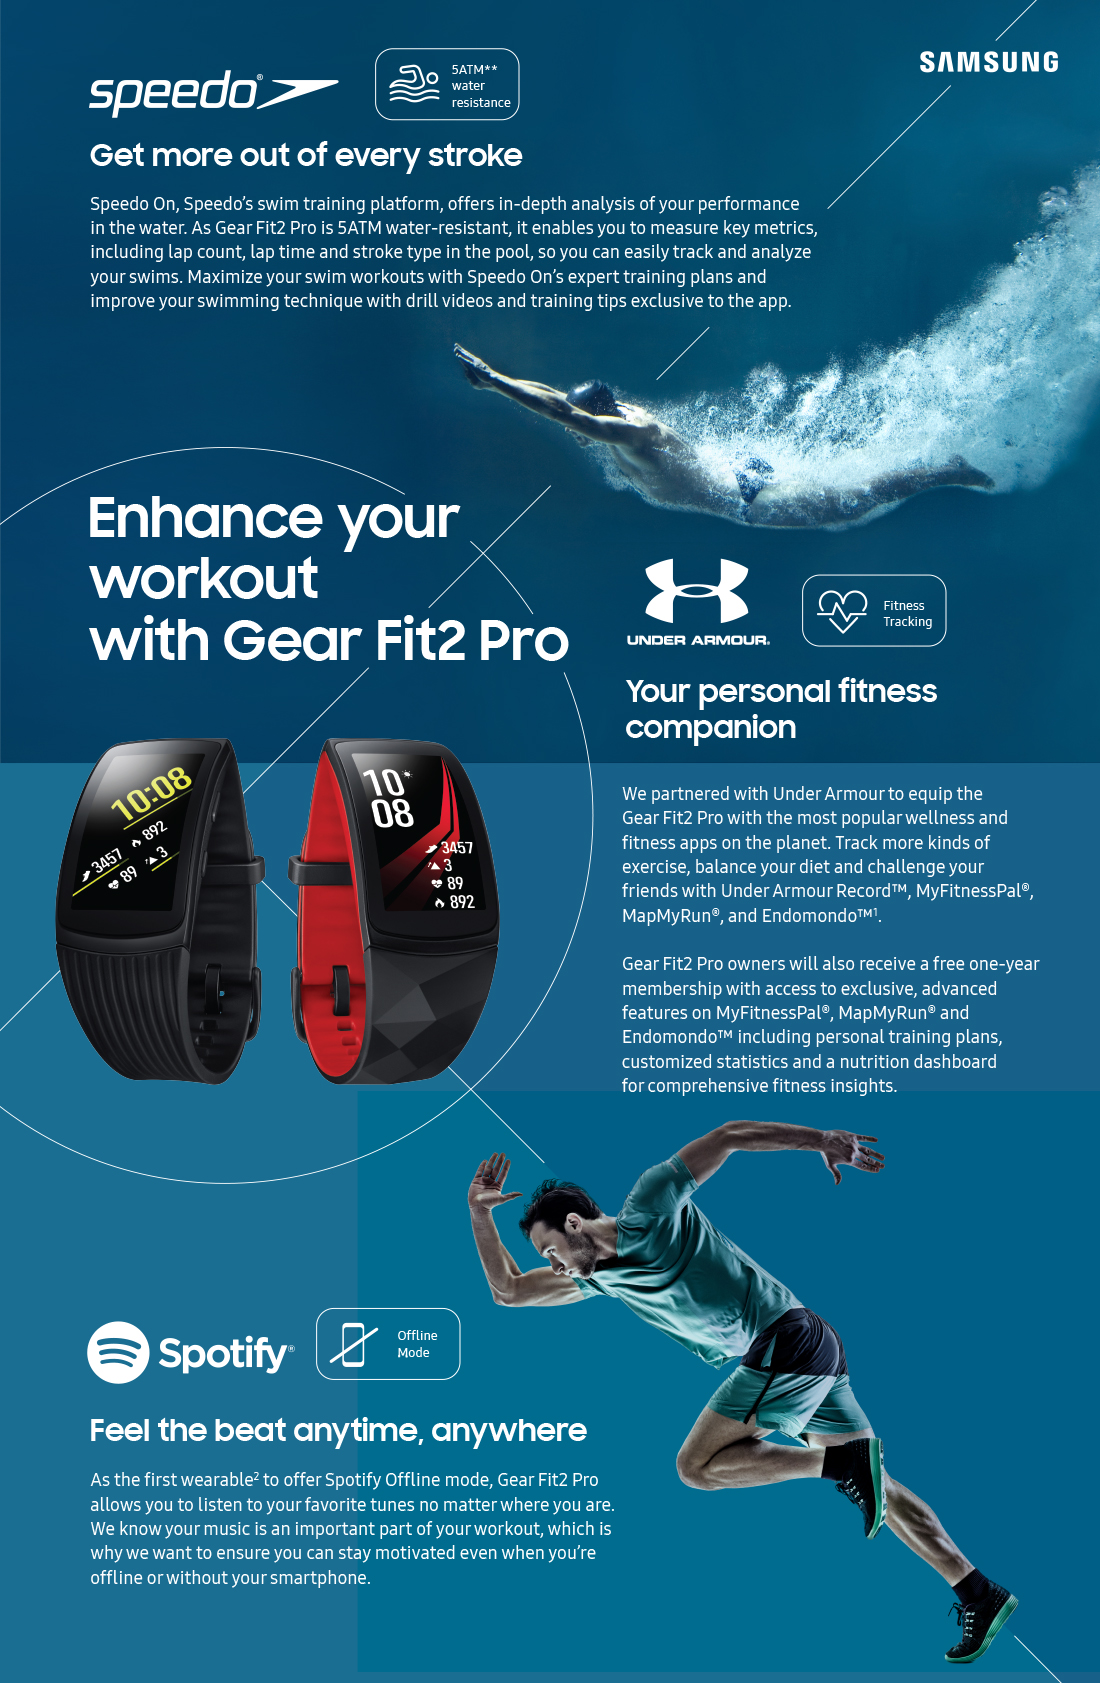 célula jerarquía Invalidez Gear Fit2 Pro Adds Strategic Partnerships for Everyday Athletes – Samsung  Mobile Press